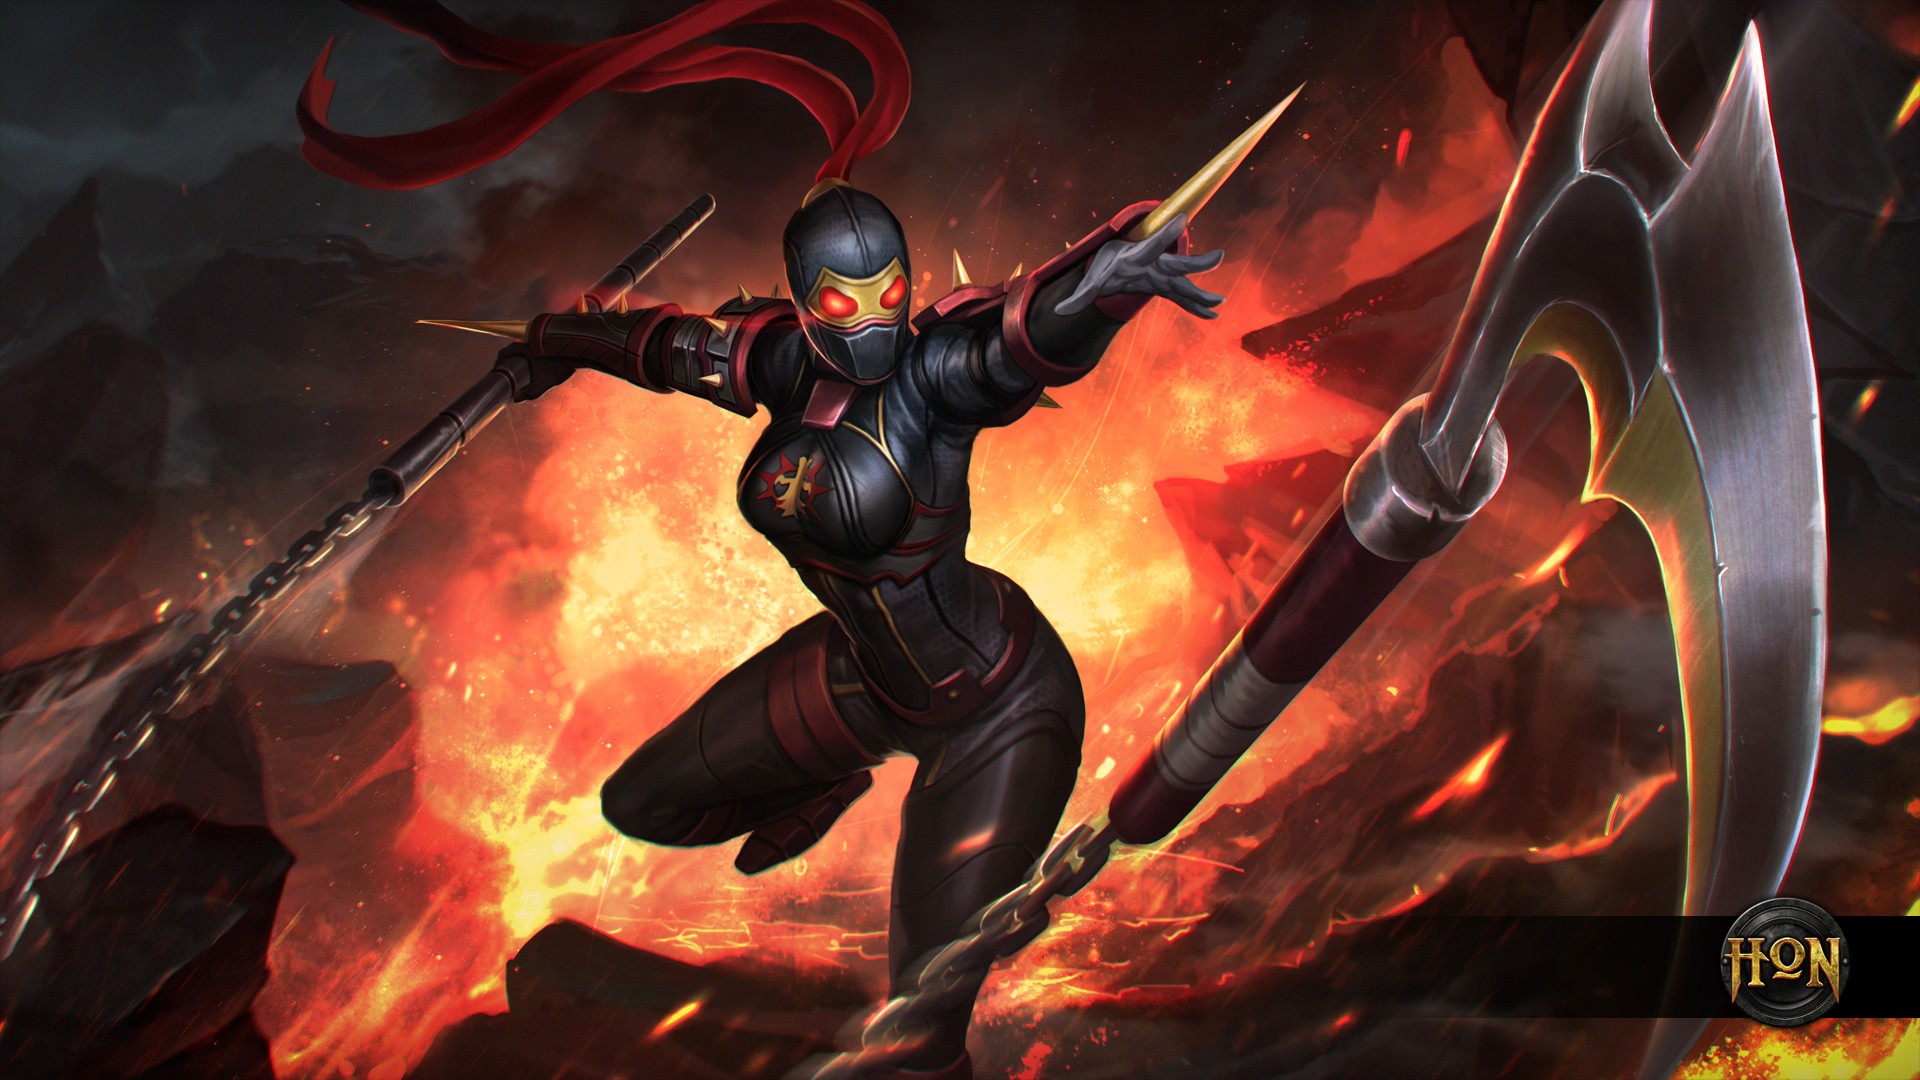 Wallpaper Heroes of Newerth, Online game, video game, girl warrior